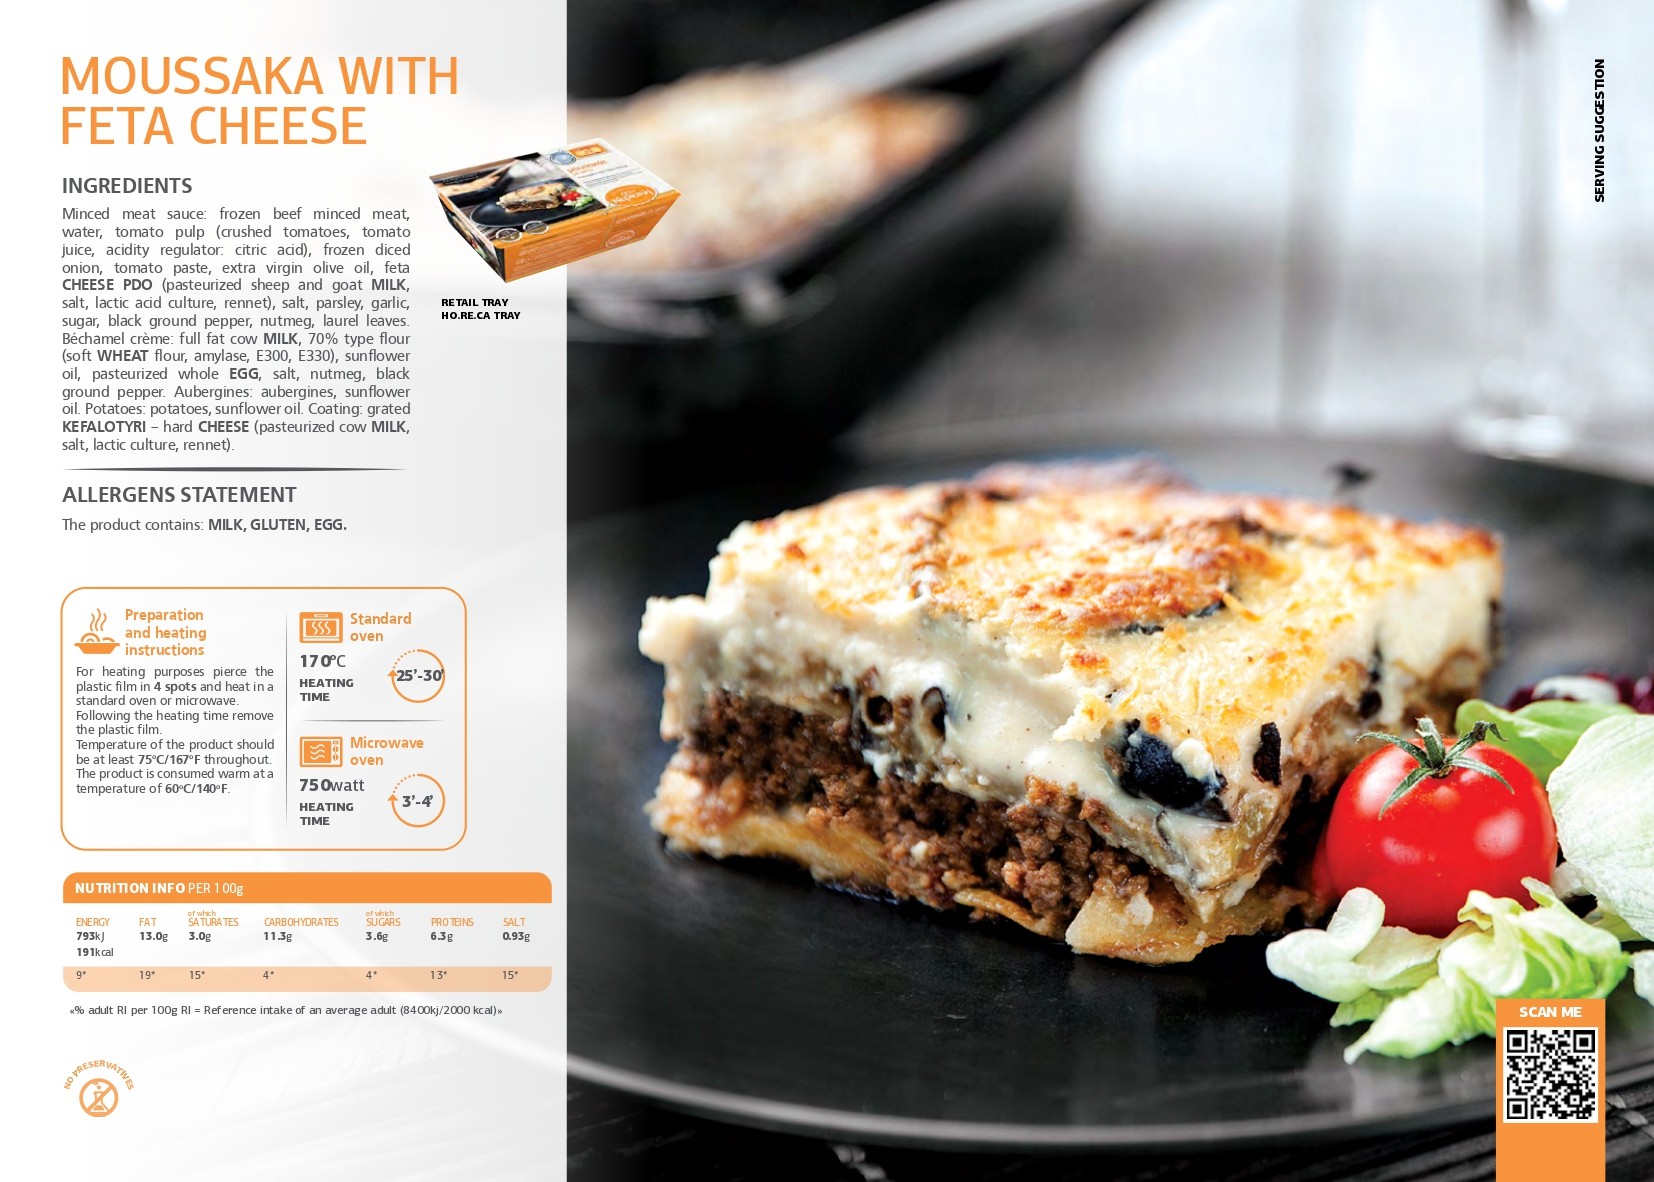 SK - Moussaka with feta cheese pdf image